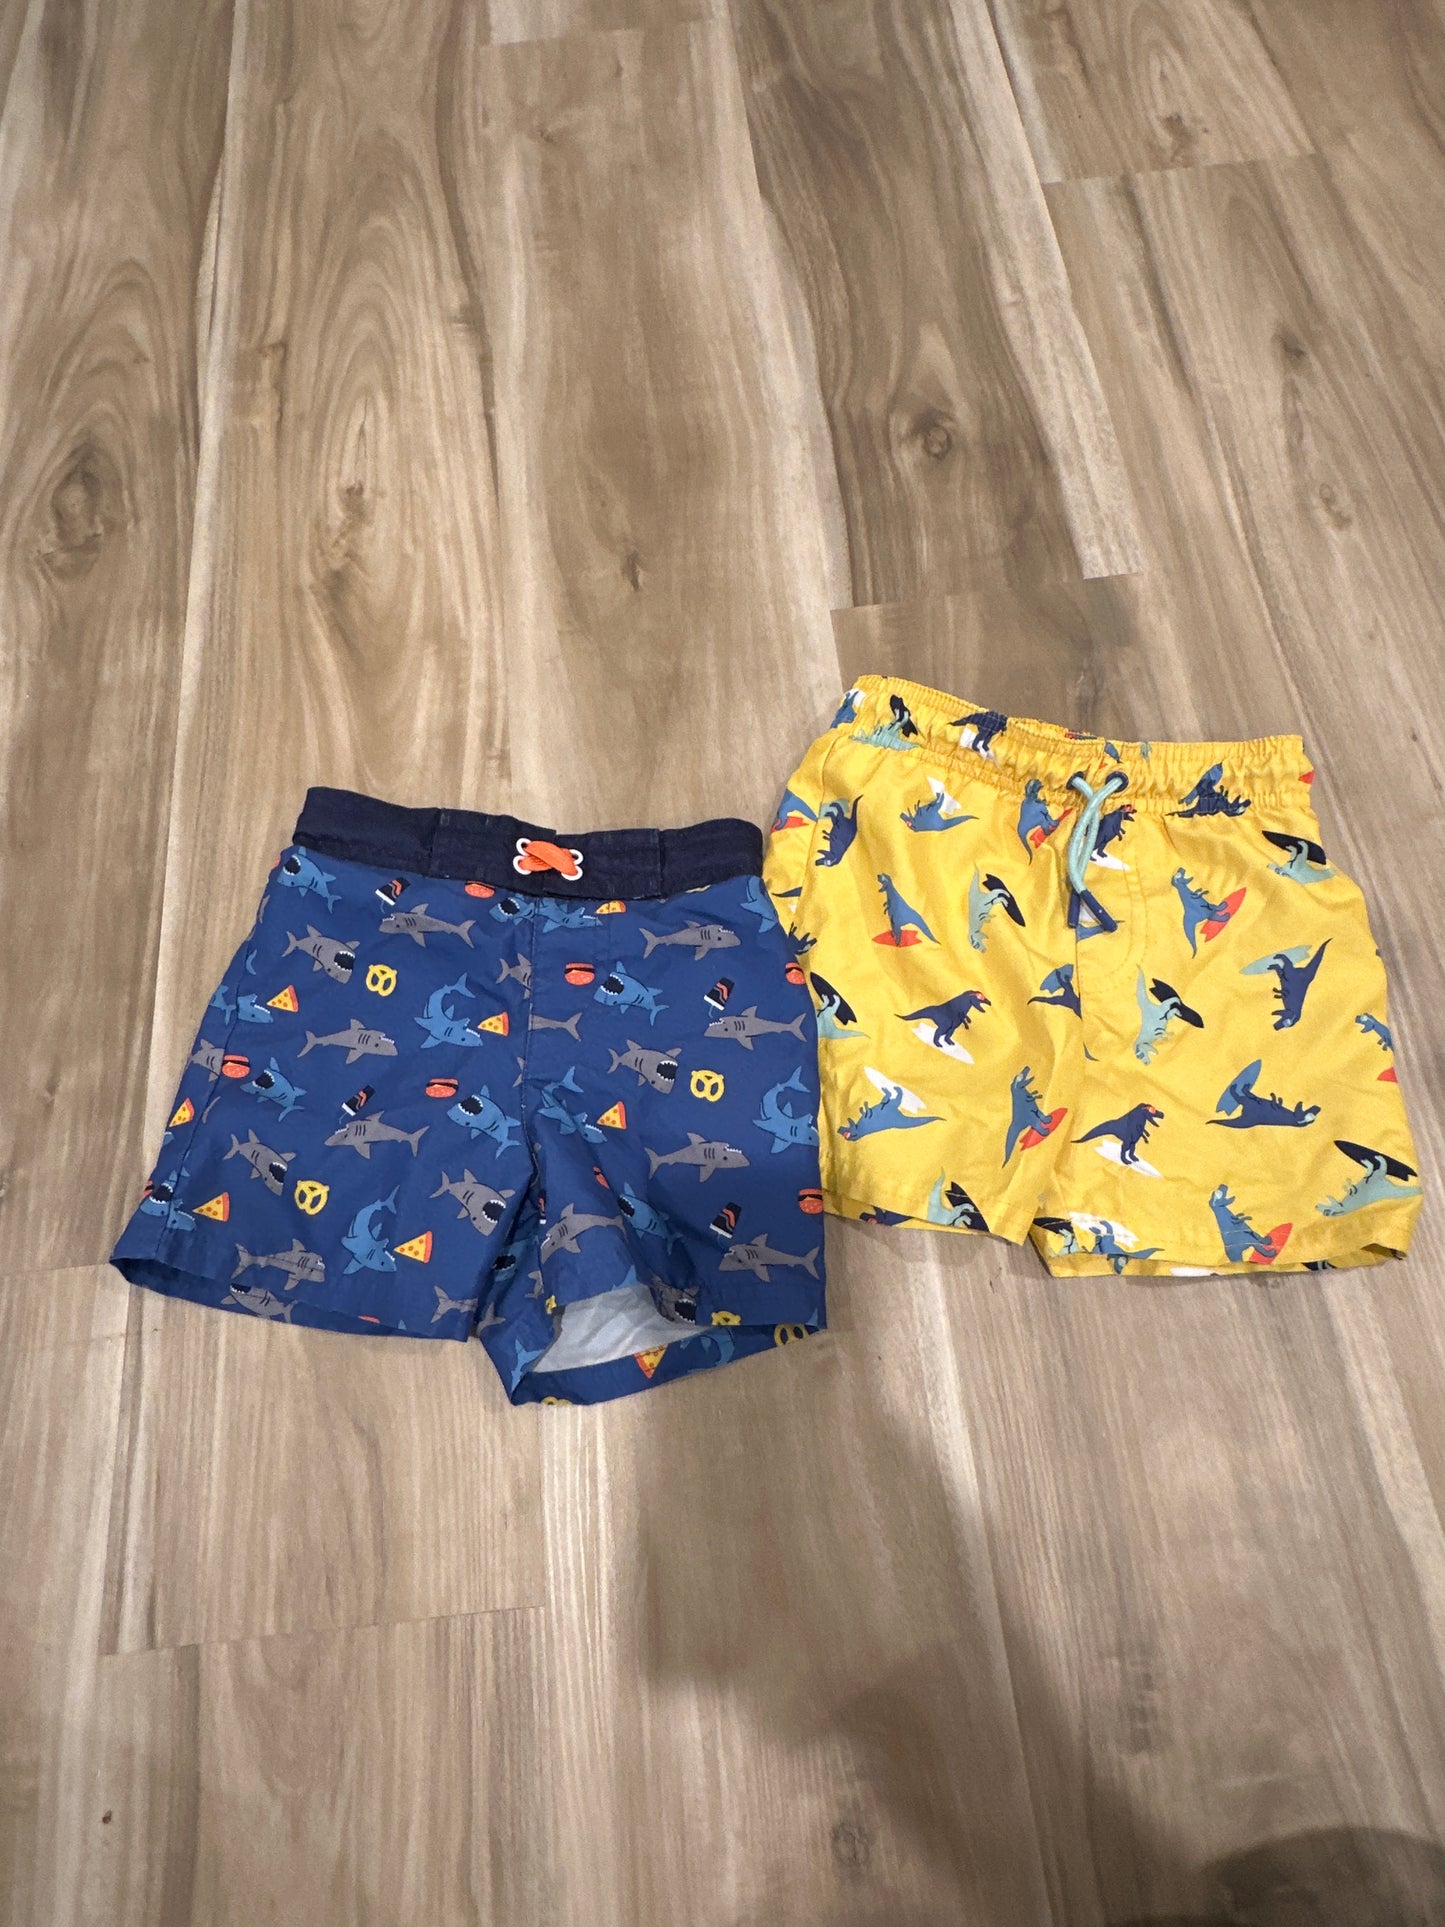 Boys 2T swim trunks (pair of 2)